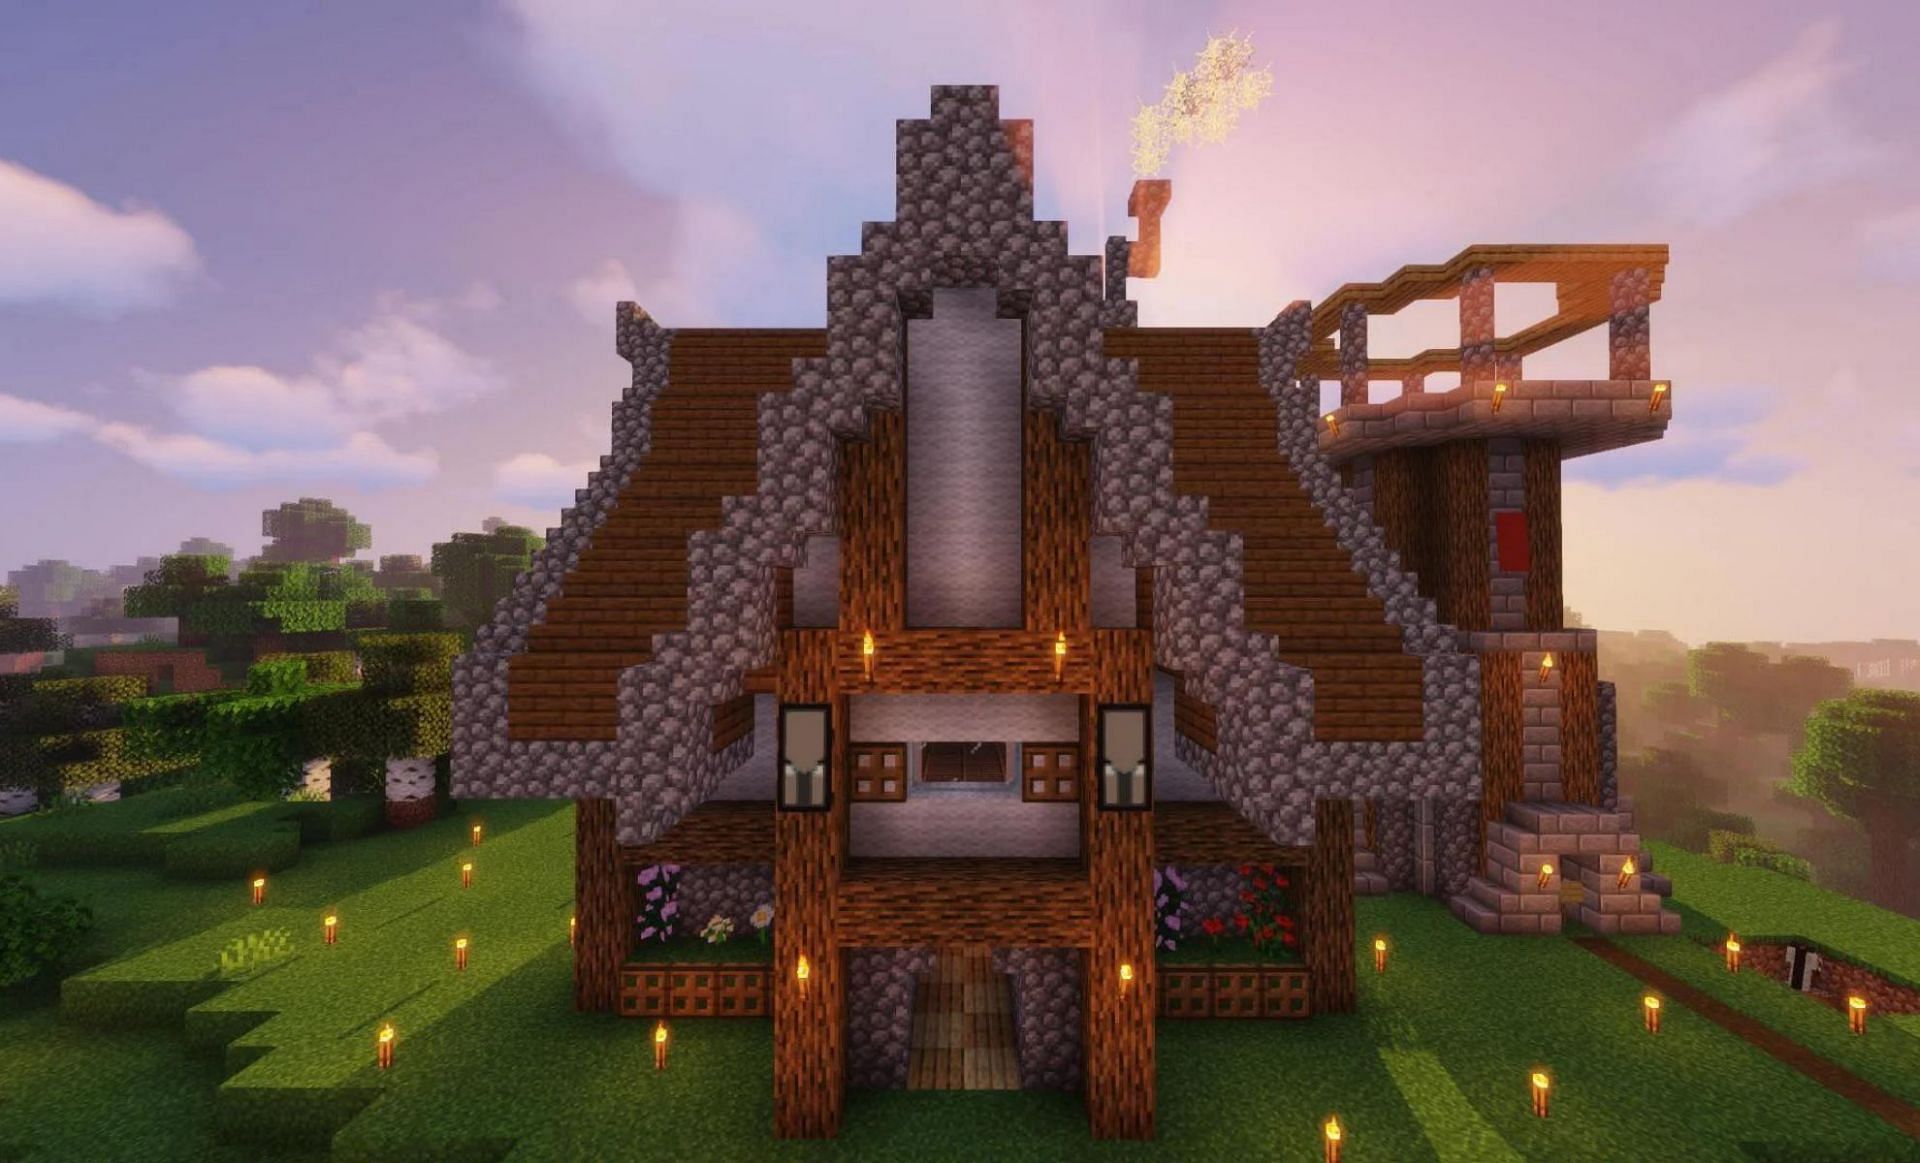 House with torches (Image via u/mrtacodoggo on Reddit0